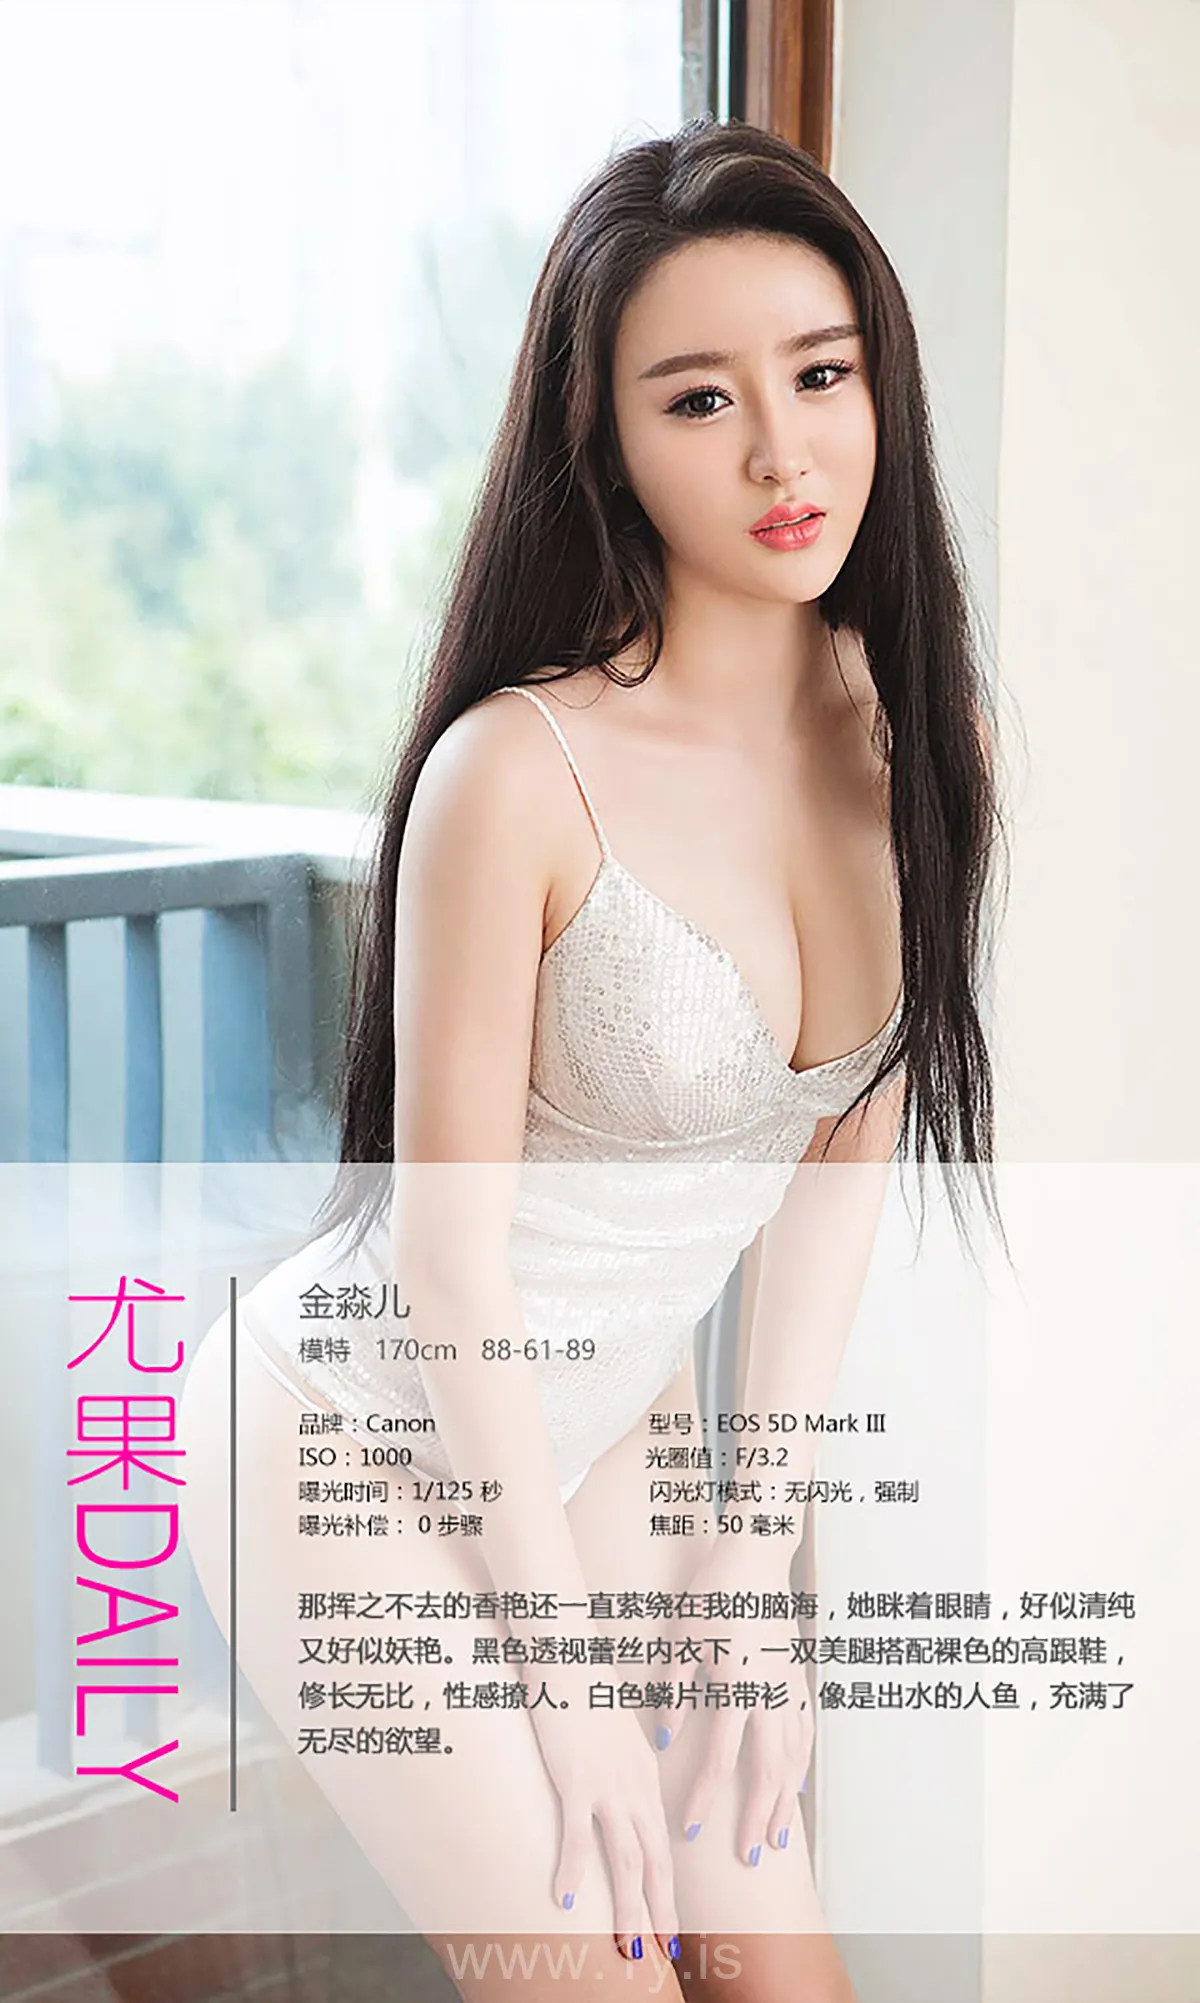 UGIRLS NO.364 Trendy & Elegant Chinese Belle 金淼儿彼女情节